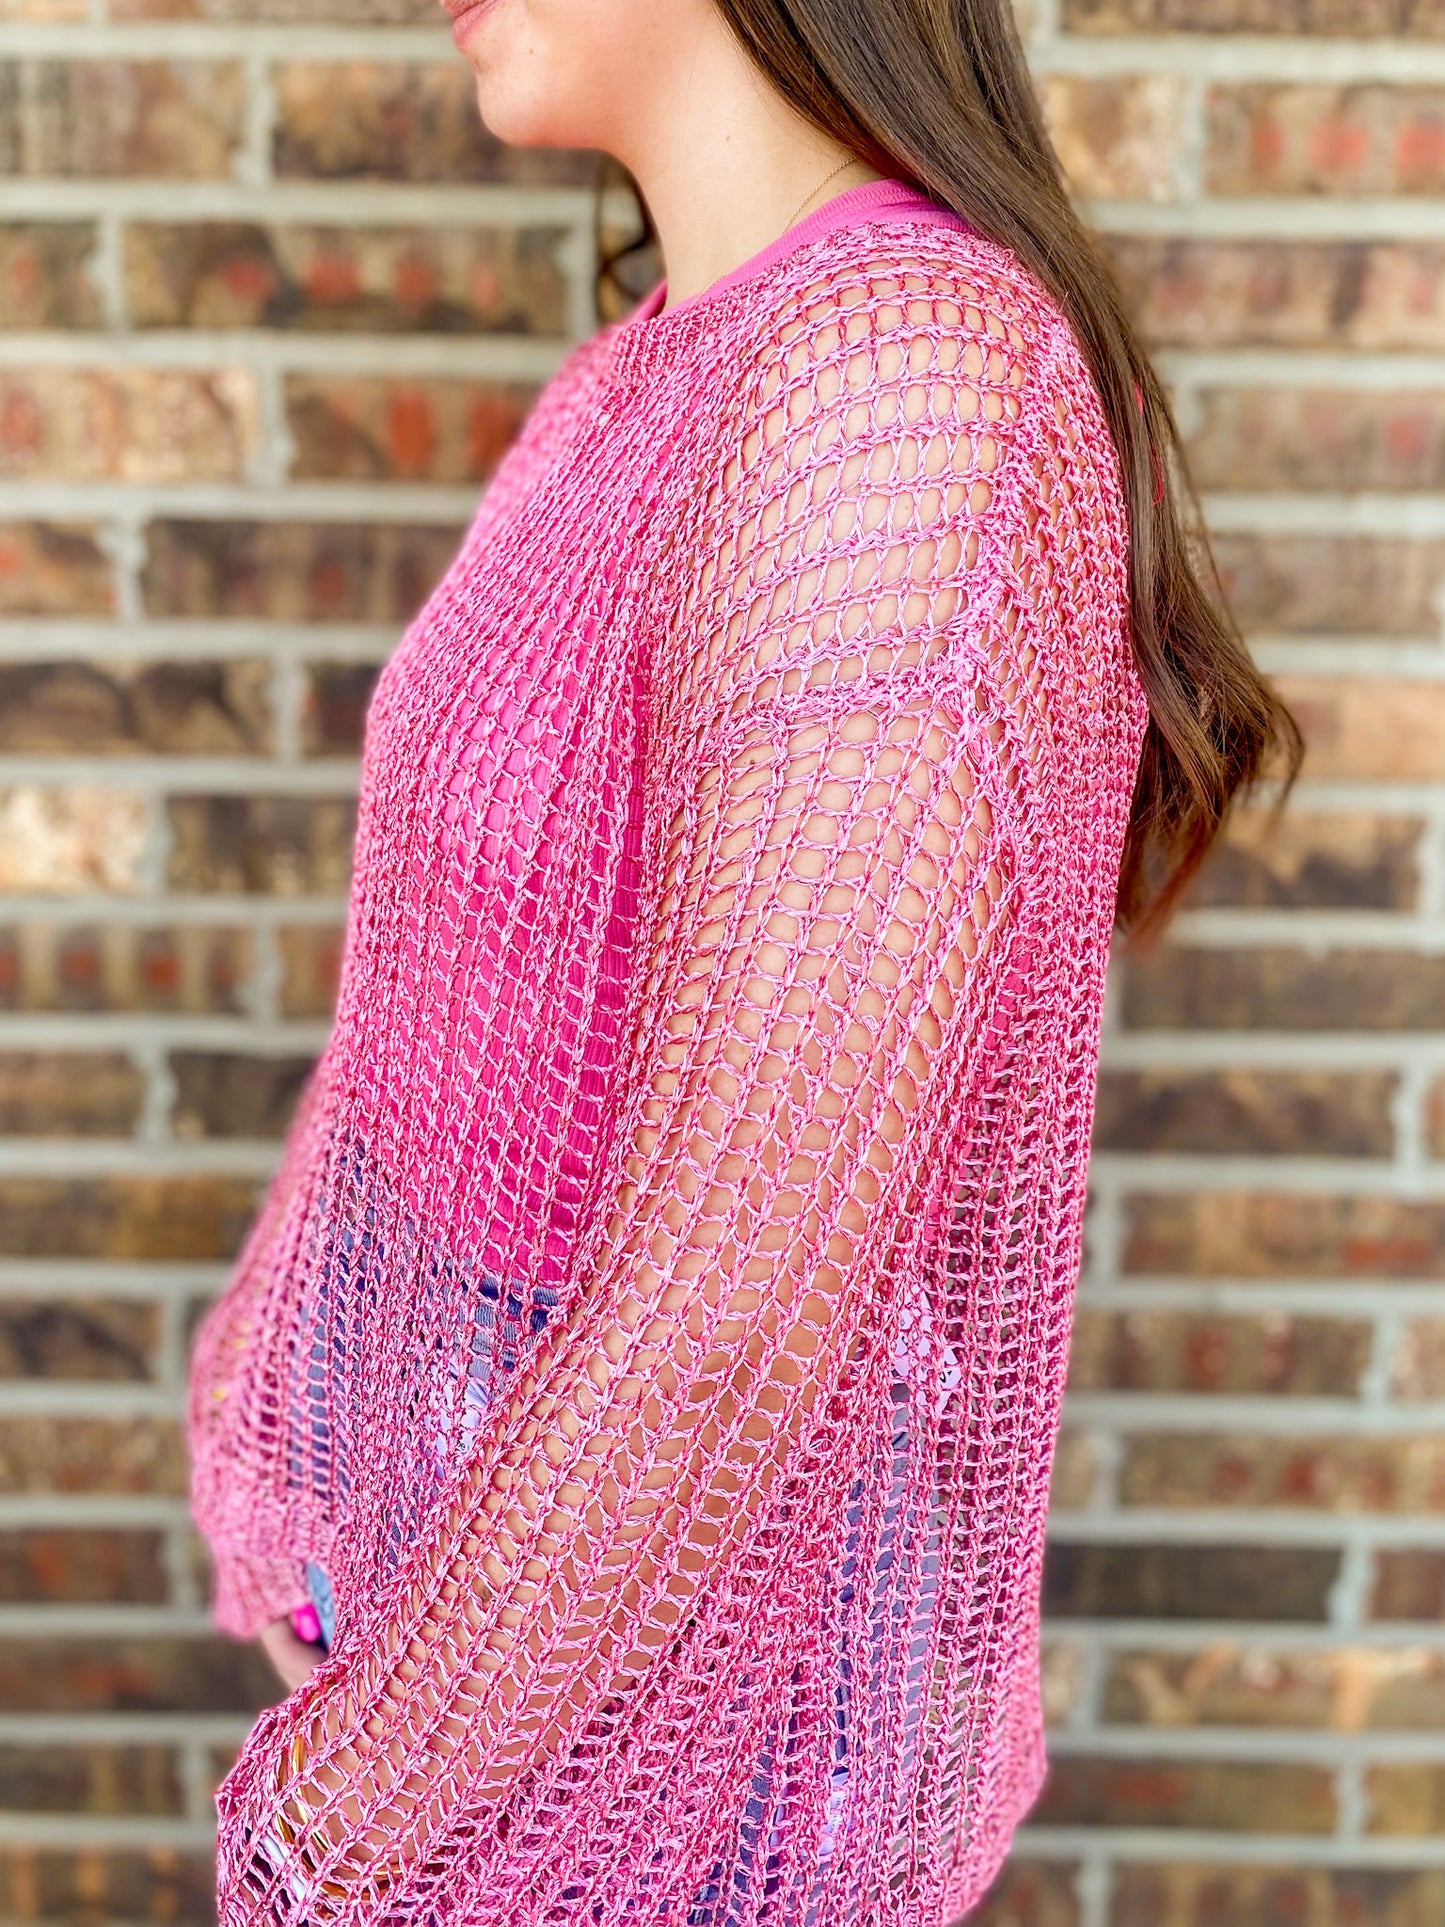 Glenna Glittered Crochet Top